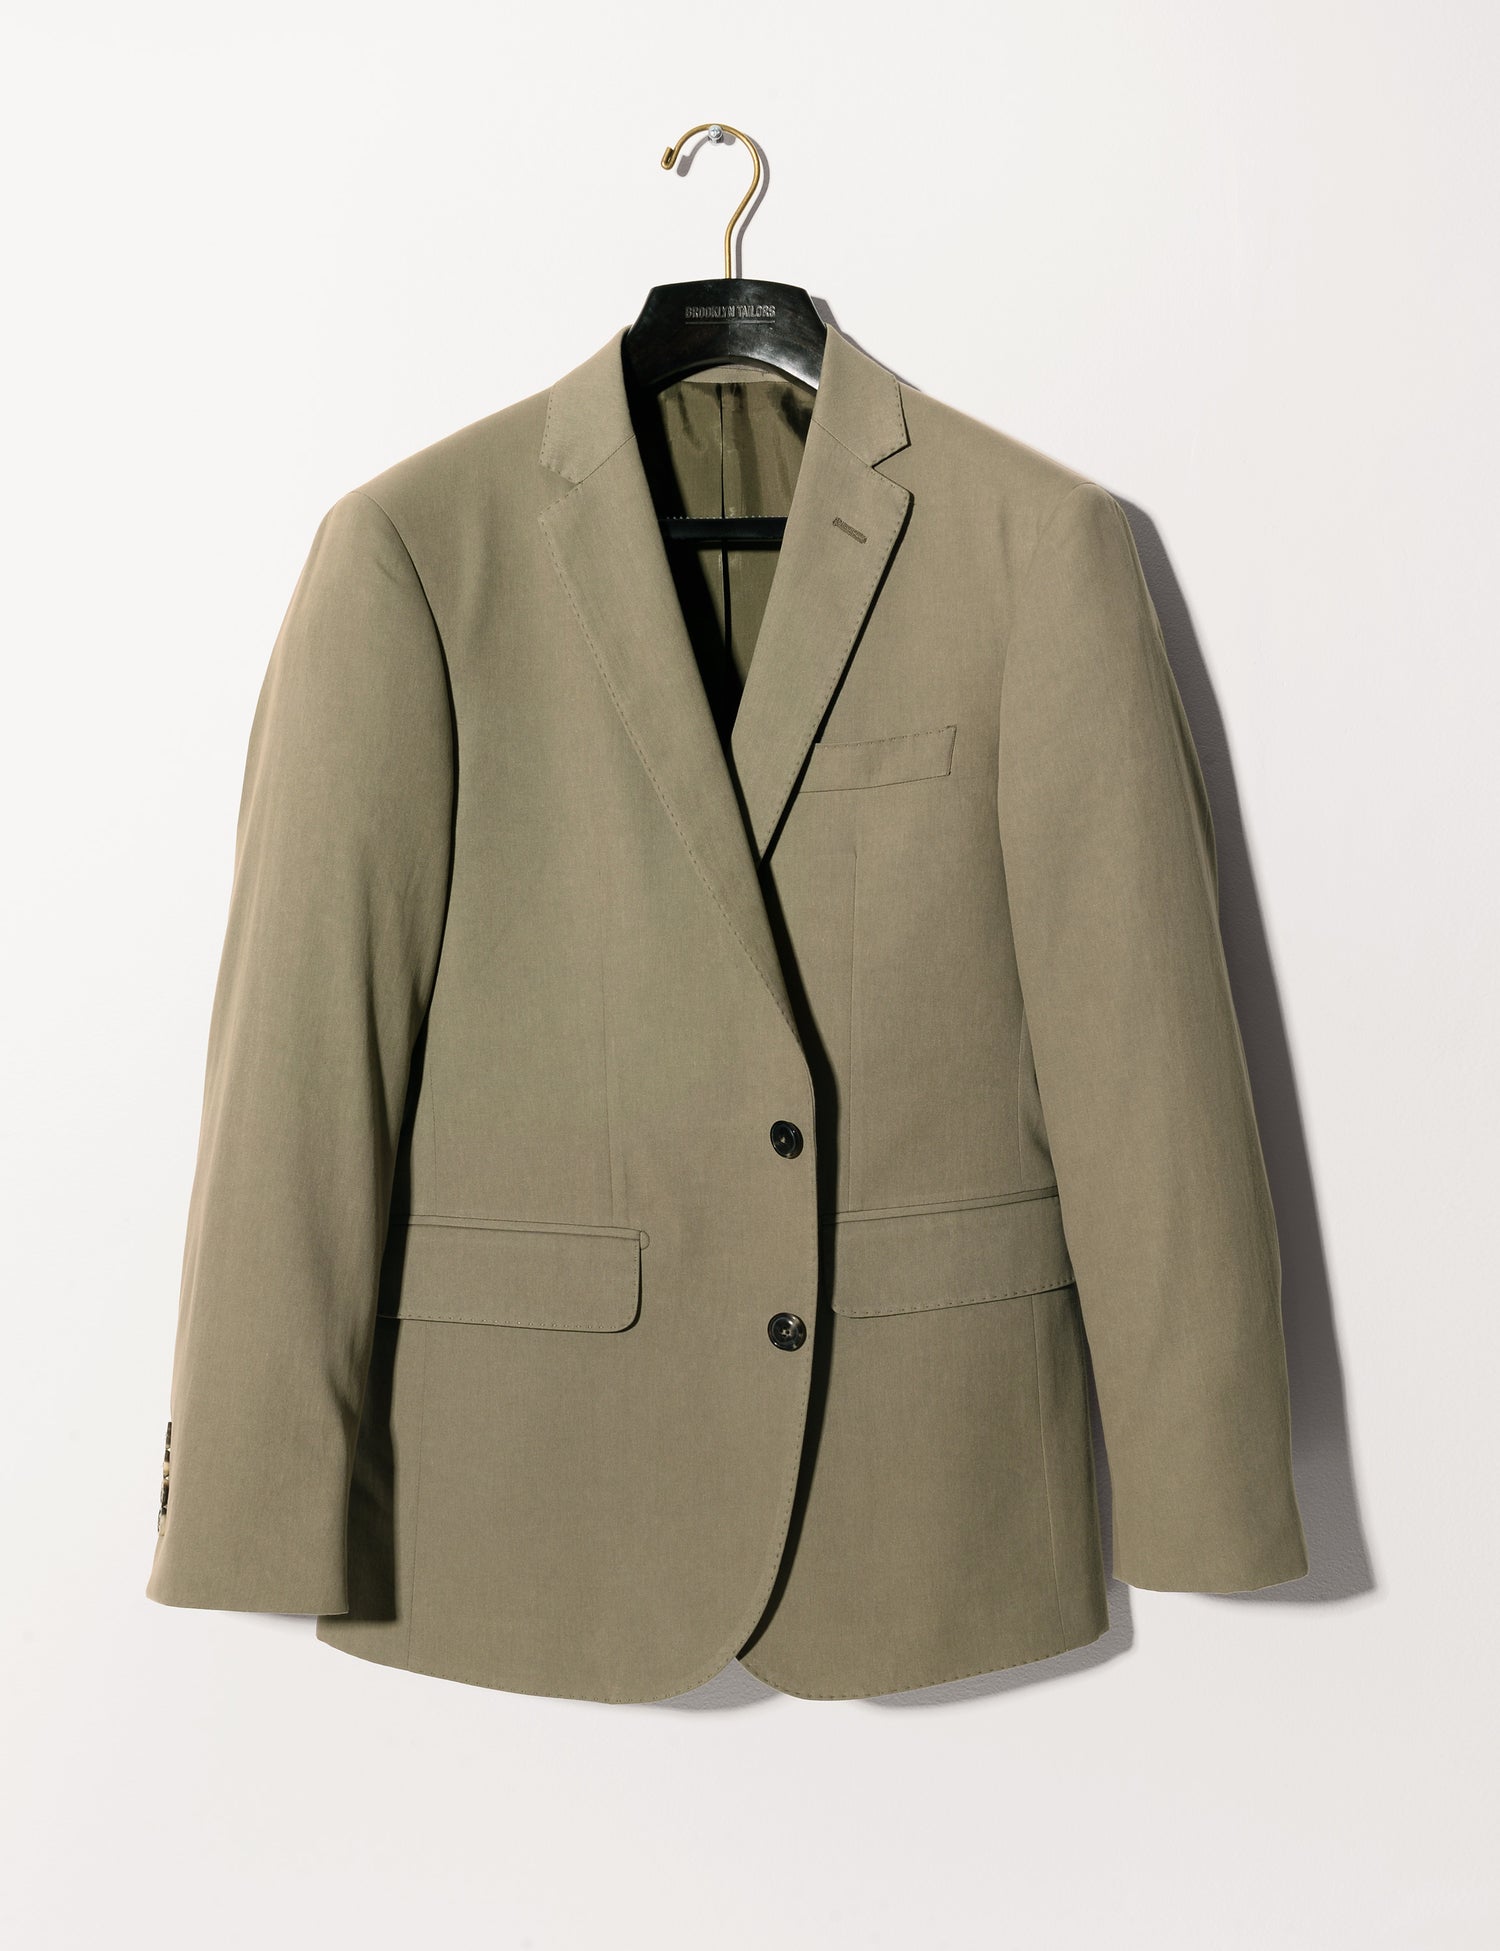 Brooklyn Tailors BKT50 Tailored Jacket in Cotton / Kapok Twill - Sonoran Green full length shot on hanger